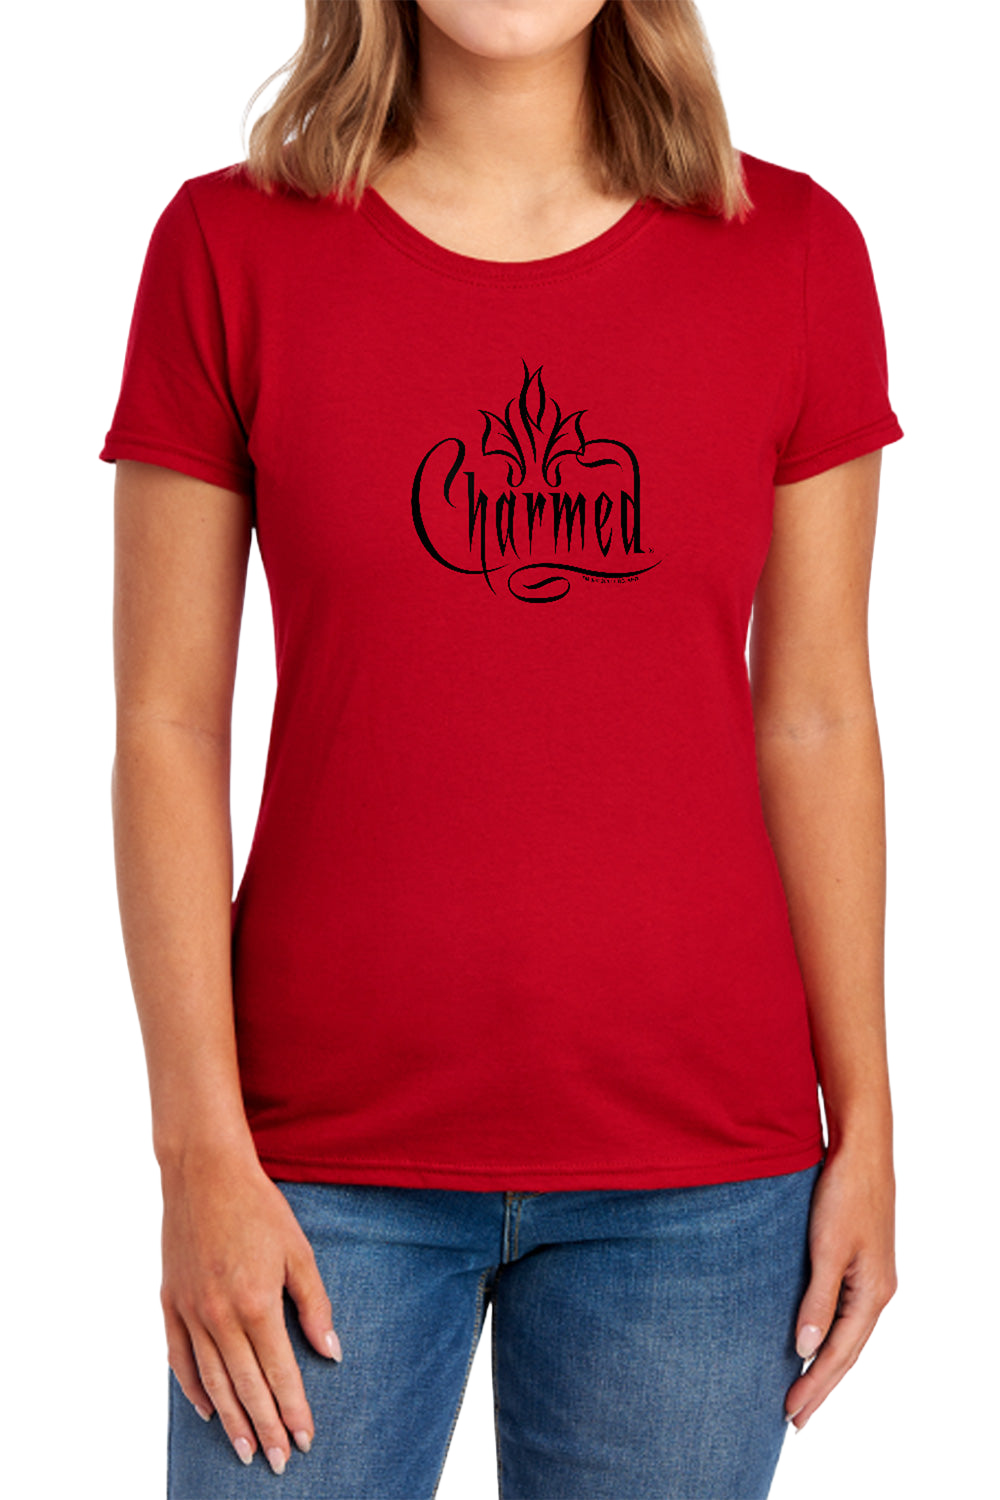 Charmed Charmed Logo - Women's T-Shirt Women's T-Shirt Charmed   